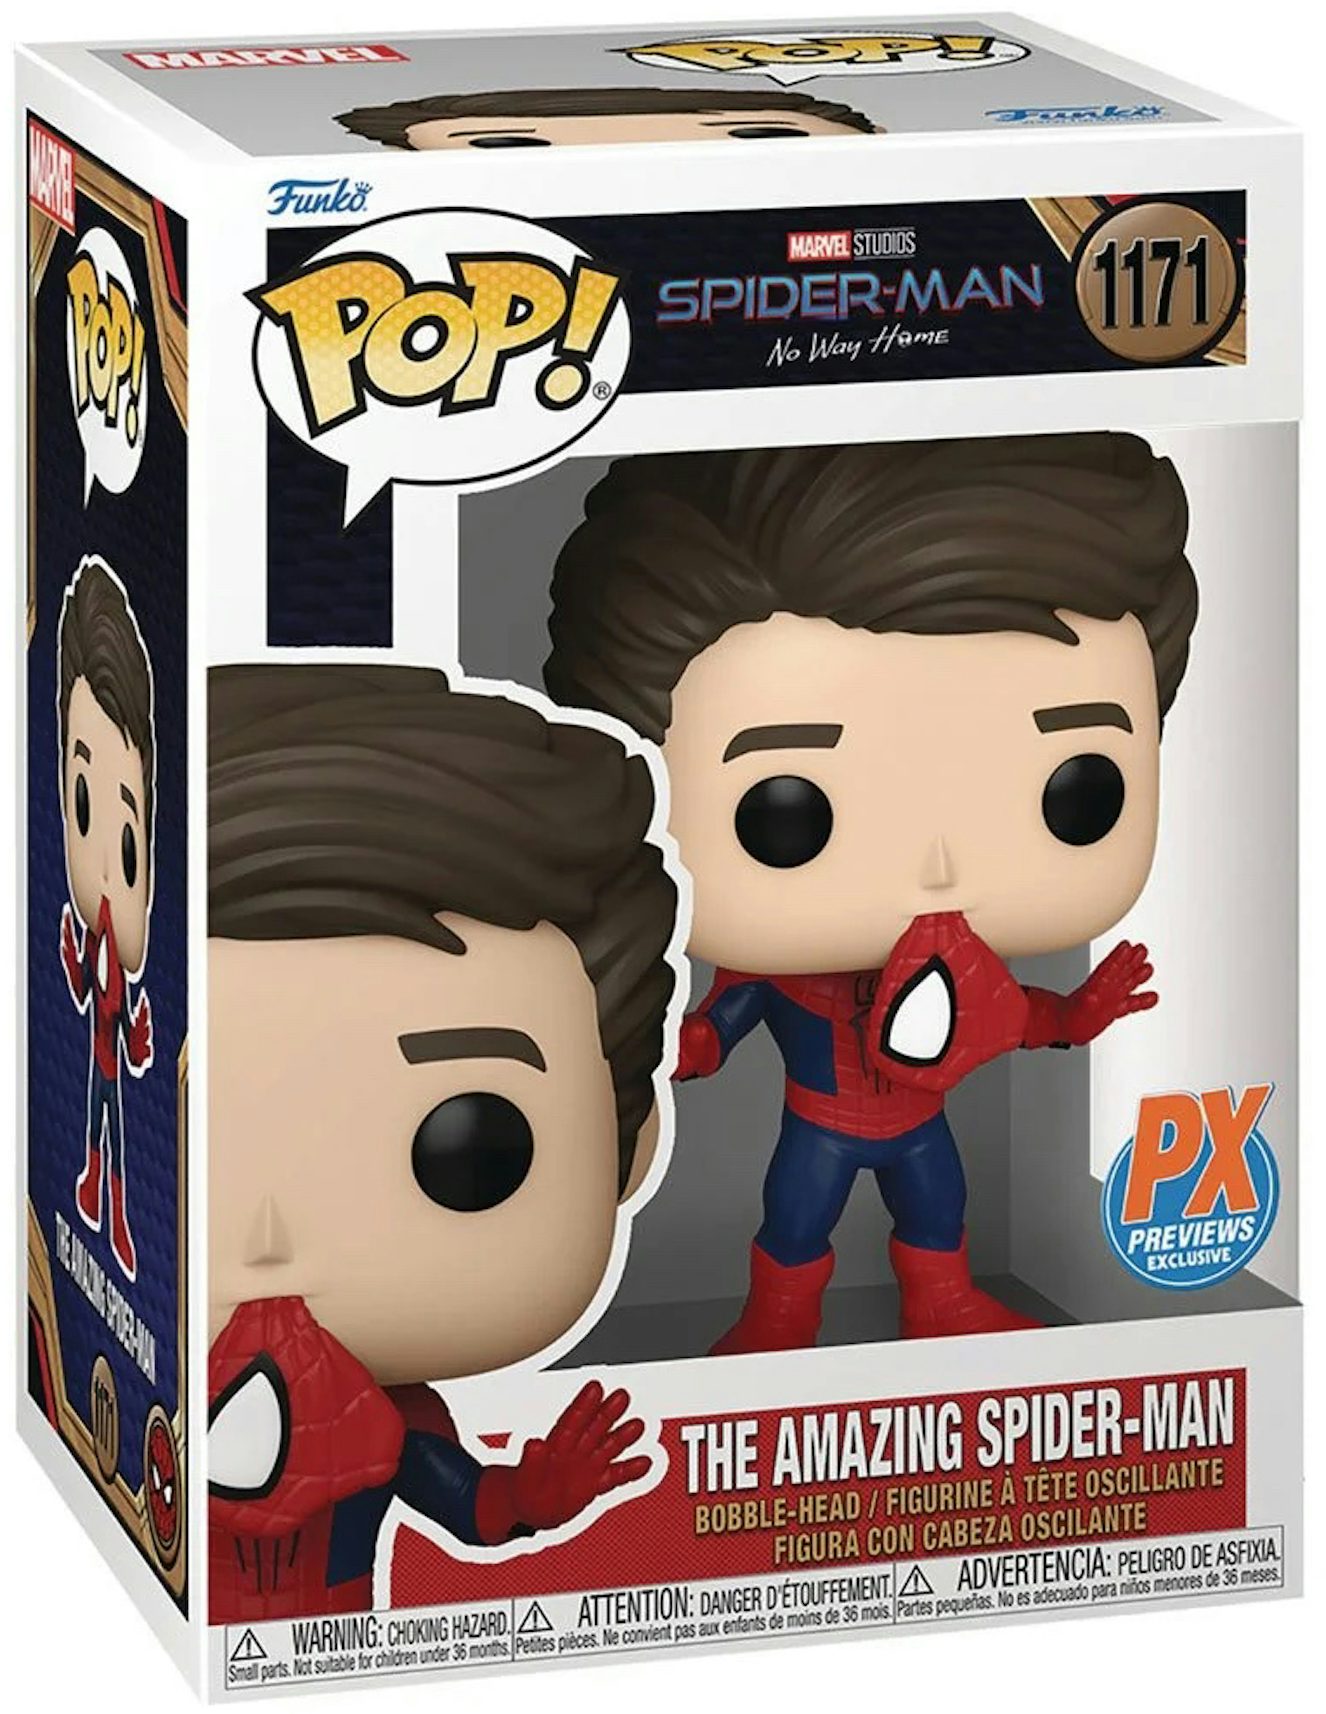 https://images.stockx.com/images/Funko-Pop-Marvel-Studios-Spider-Man-No-Way-Home-The-Amazing-Spider-Man-PX-Previews-Exclusive-Figure-1171.jpg?fit=fill&bg=FFFFFF&w=1200&h=857&fm=jpg&auto=compress&dpr=2&trim=color&updated_at=1669708787&q=60